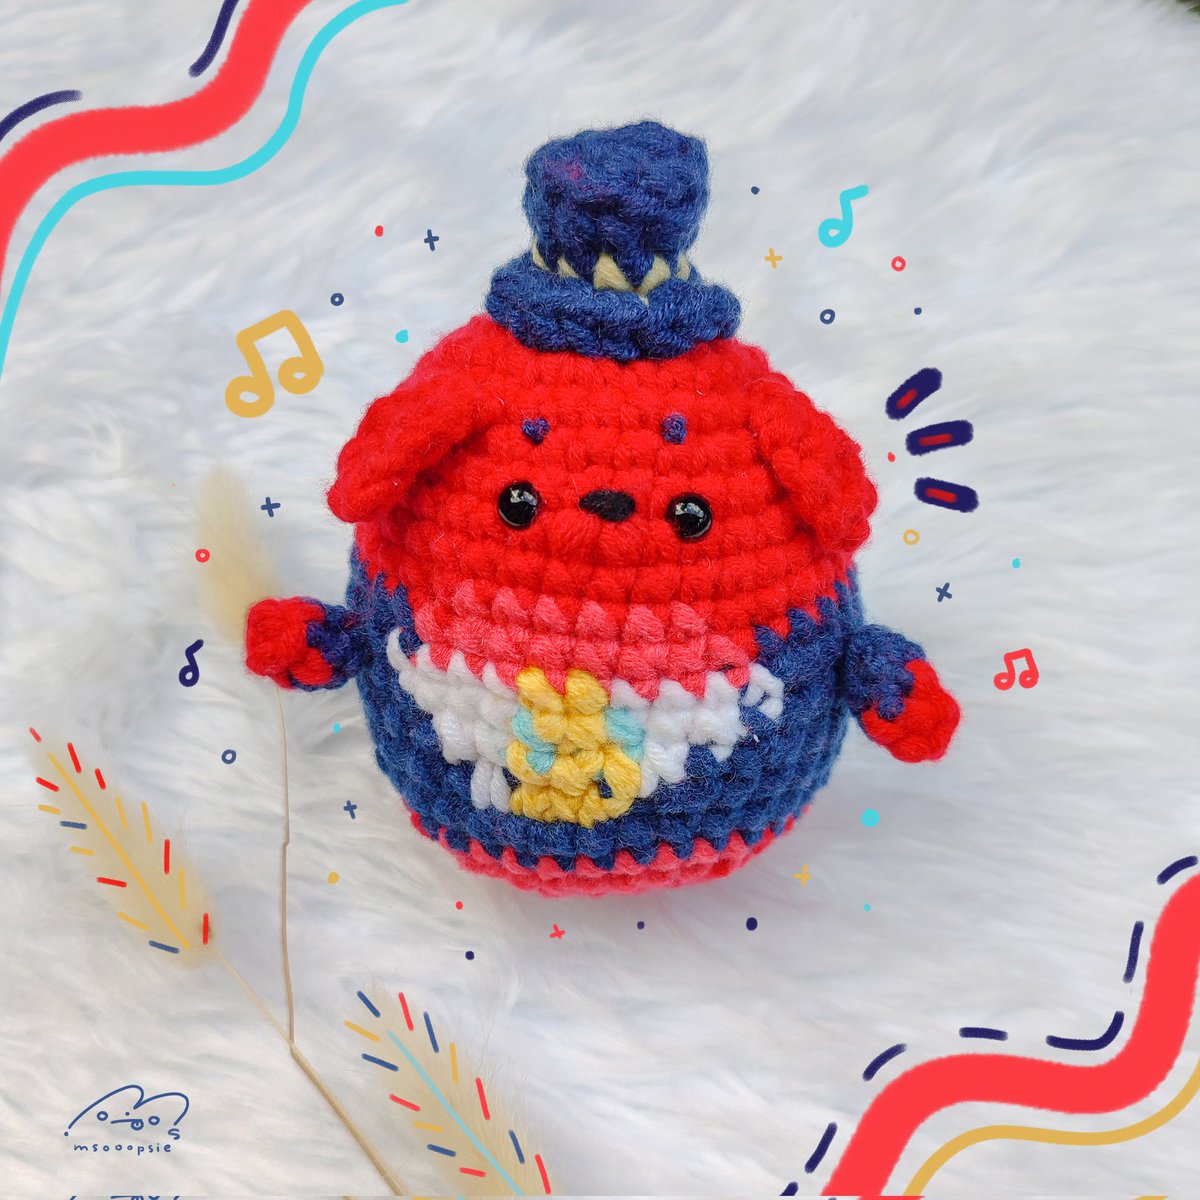 ✨ Red, the Hot Dog ✨
:
:
:
#crochet #crochetaddict #hotdog #red #crochettoy #crochetdoll #yarn